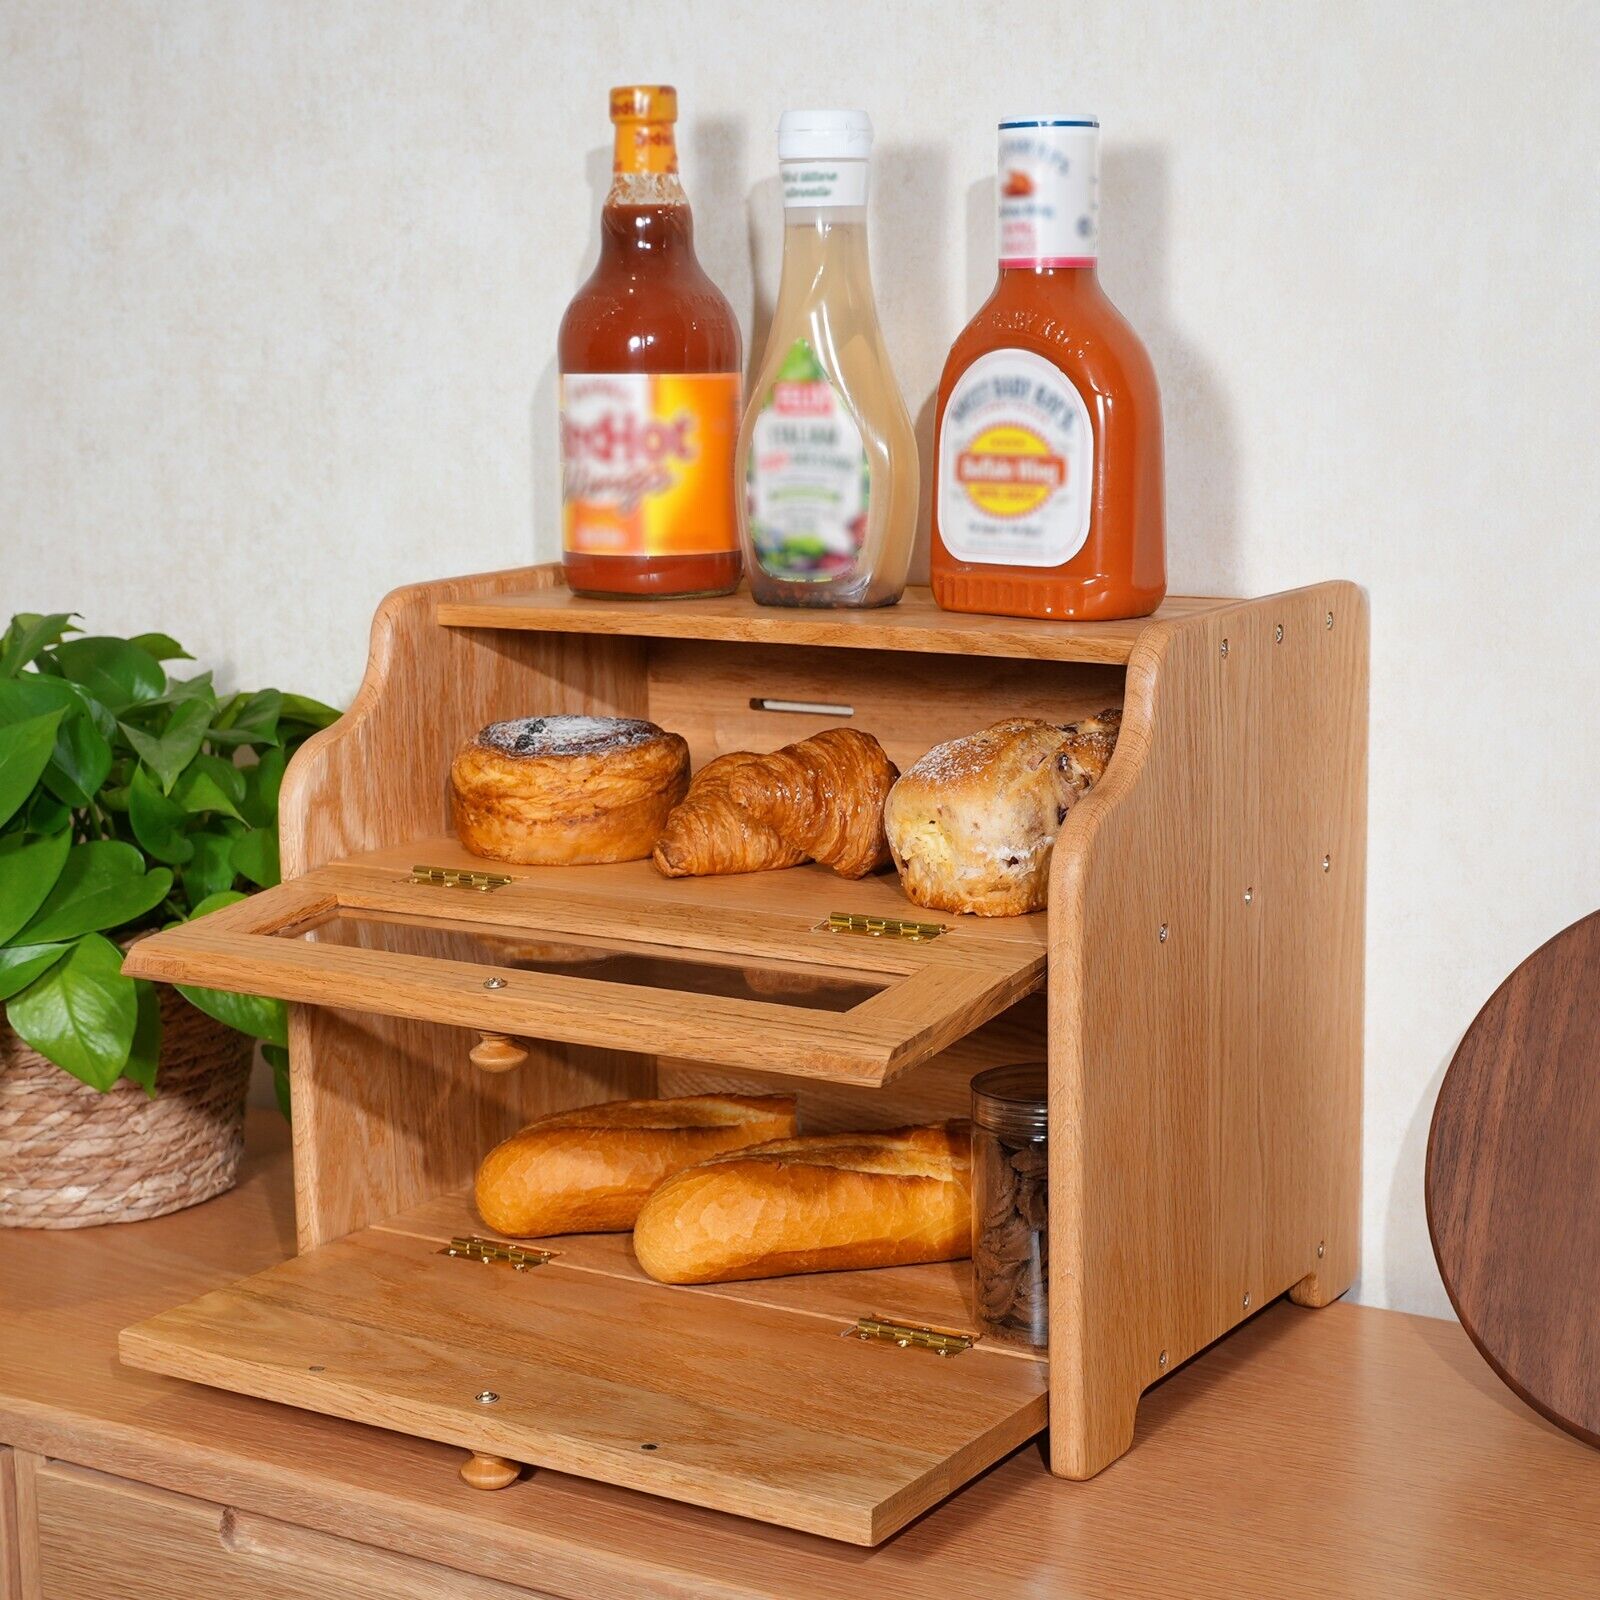 CONSDAN Bread Box, Solid Wood, Oak -Official refurbished